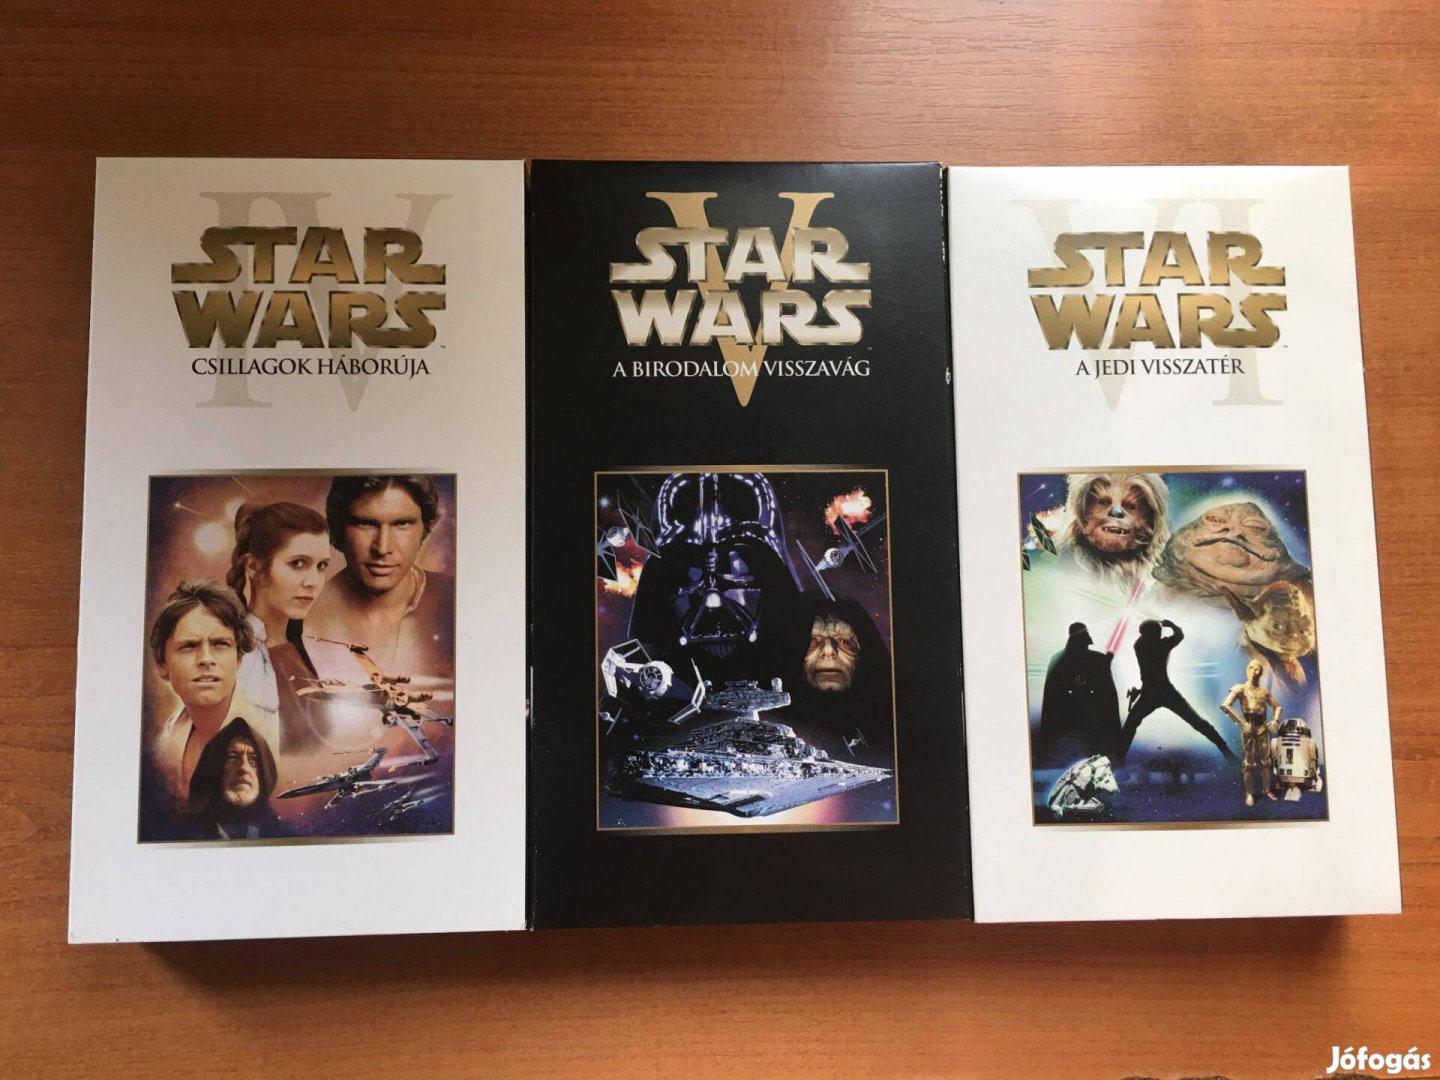 Star Wars trilógia